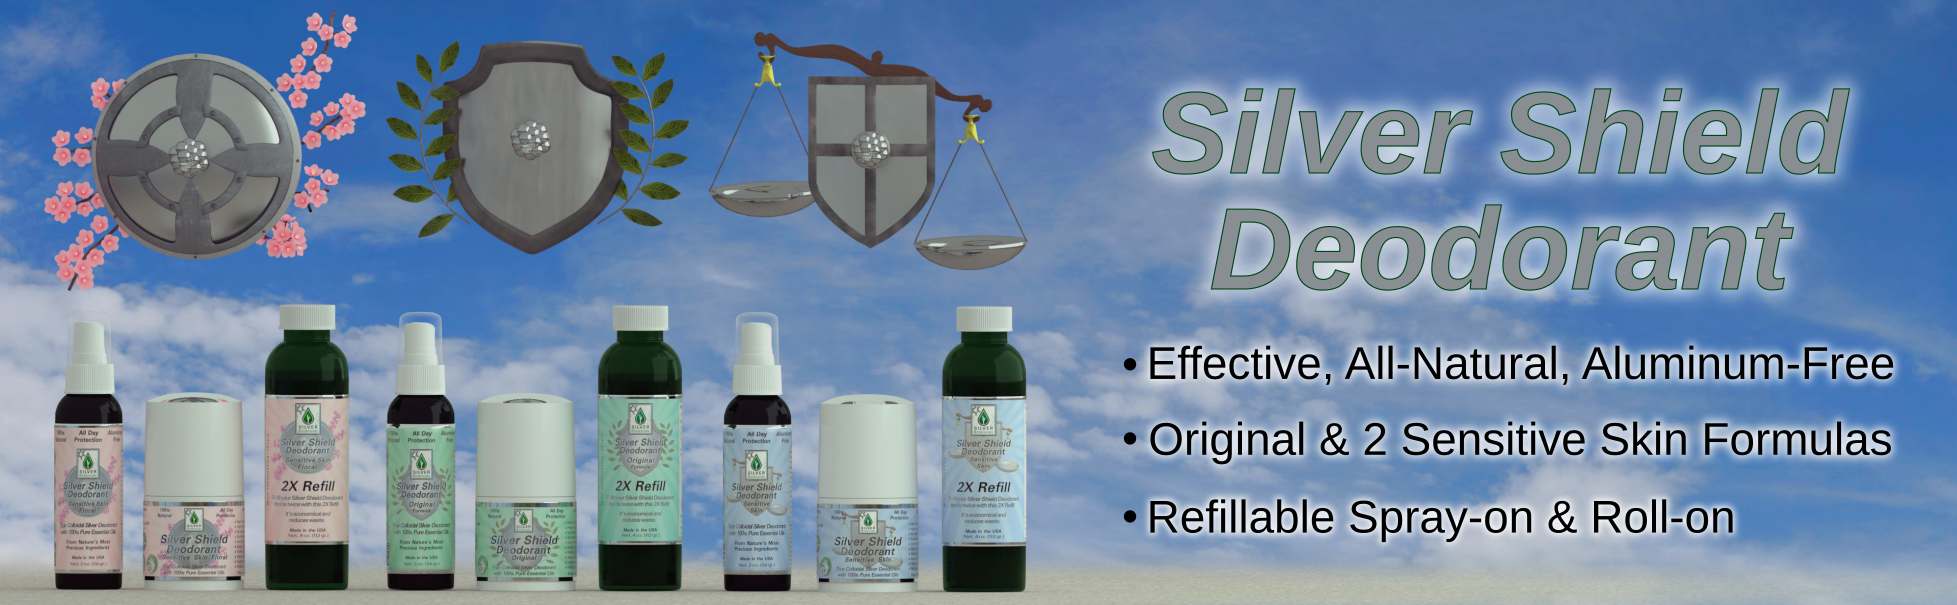 Silver Shield Deodorant - Wow-Factor Effectiveness